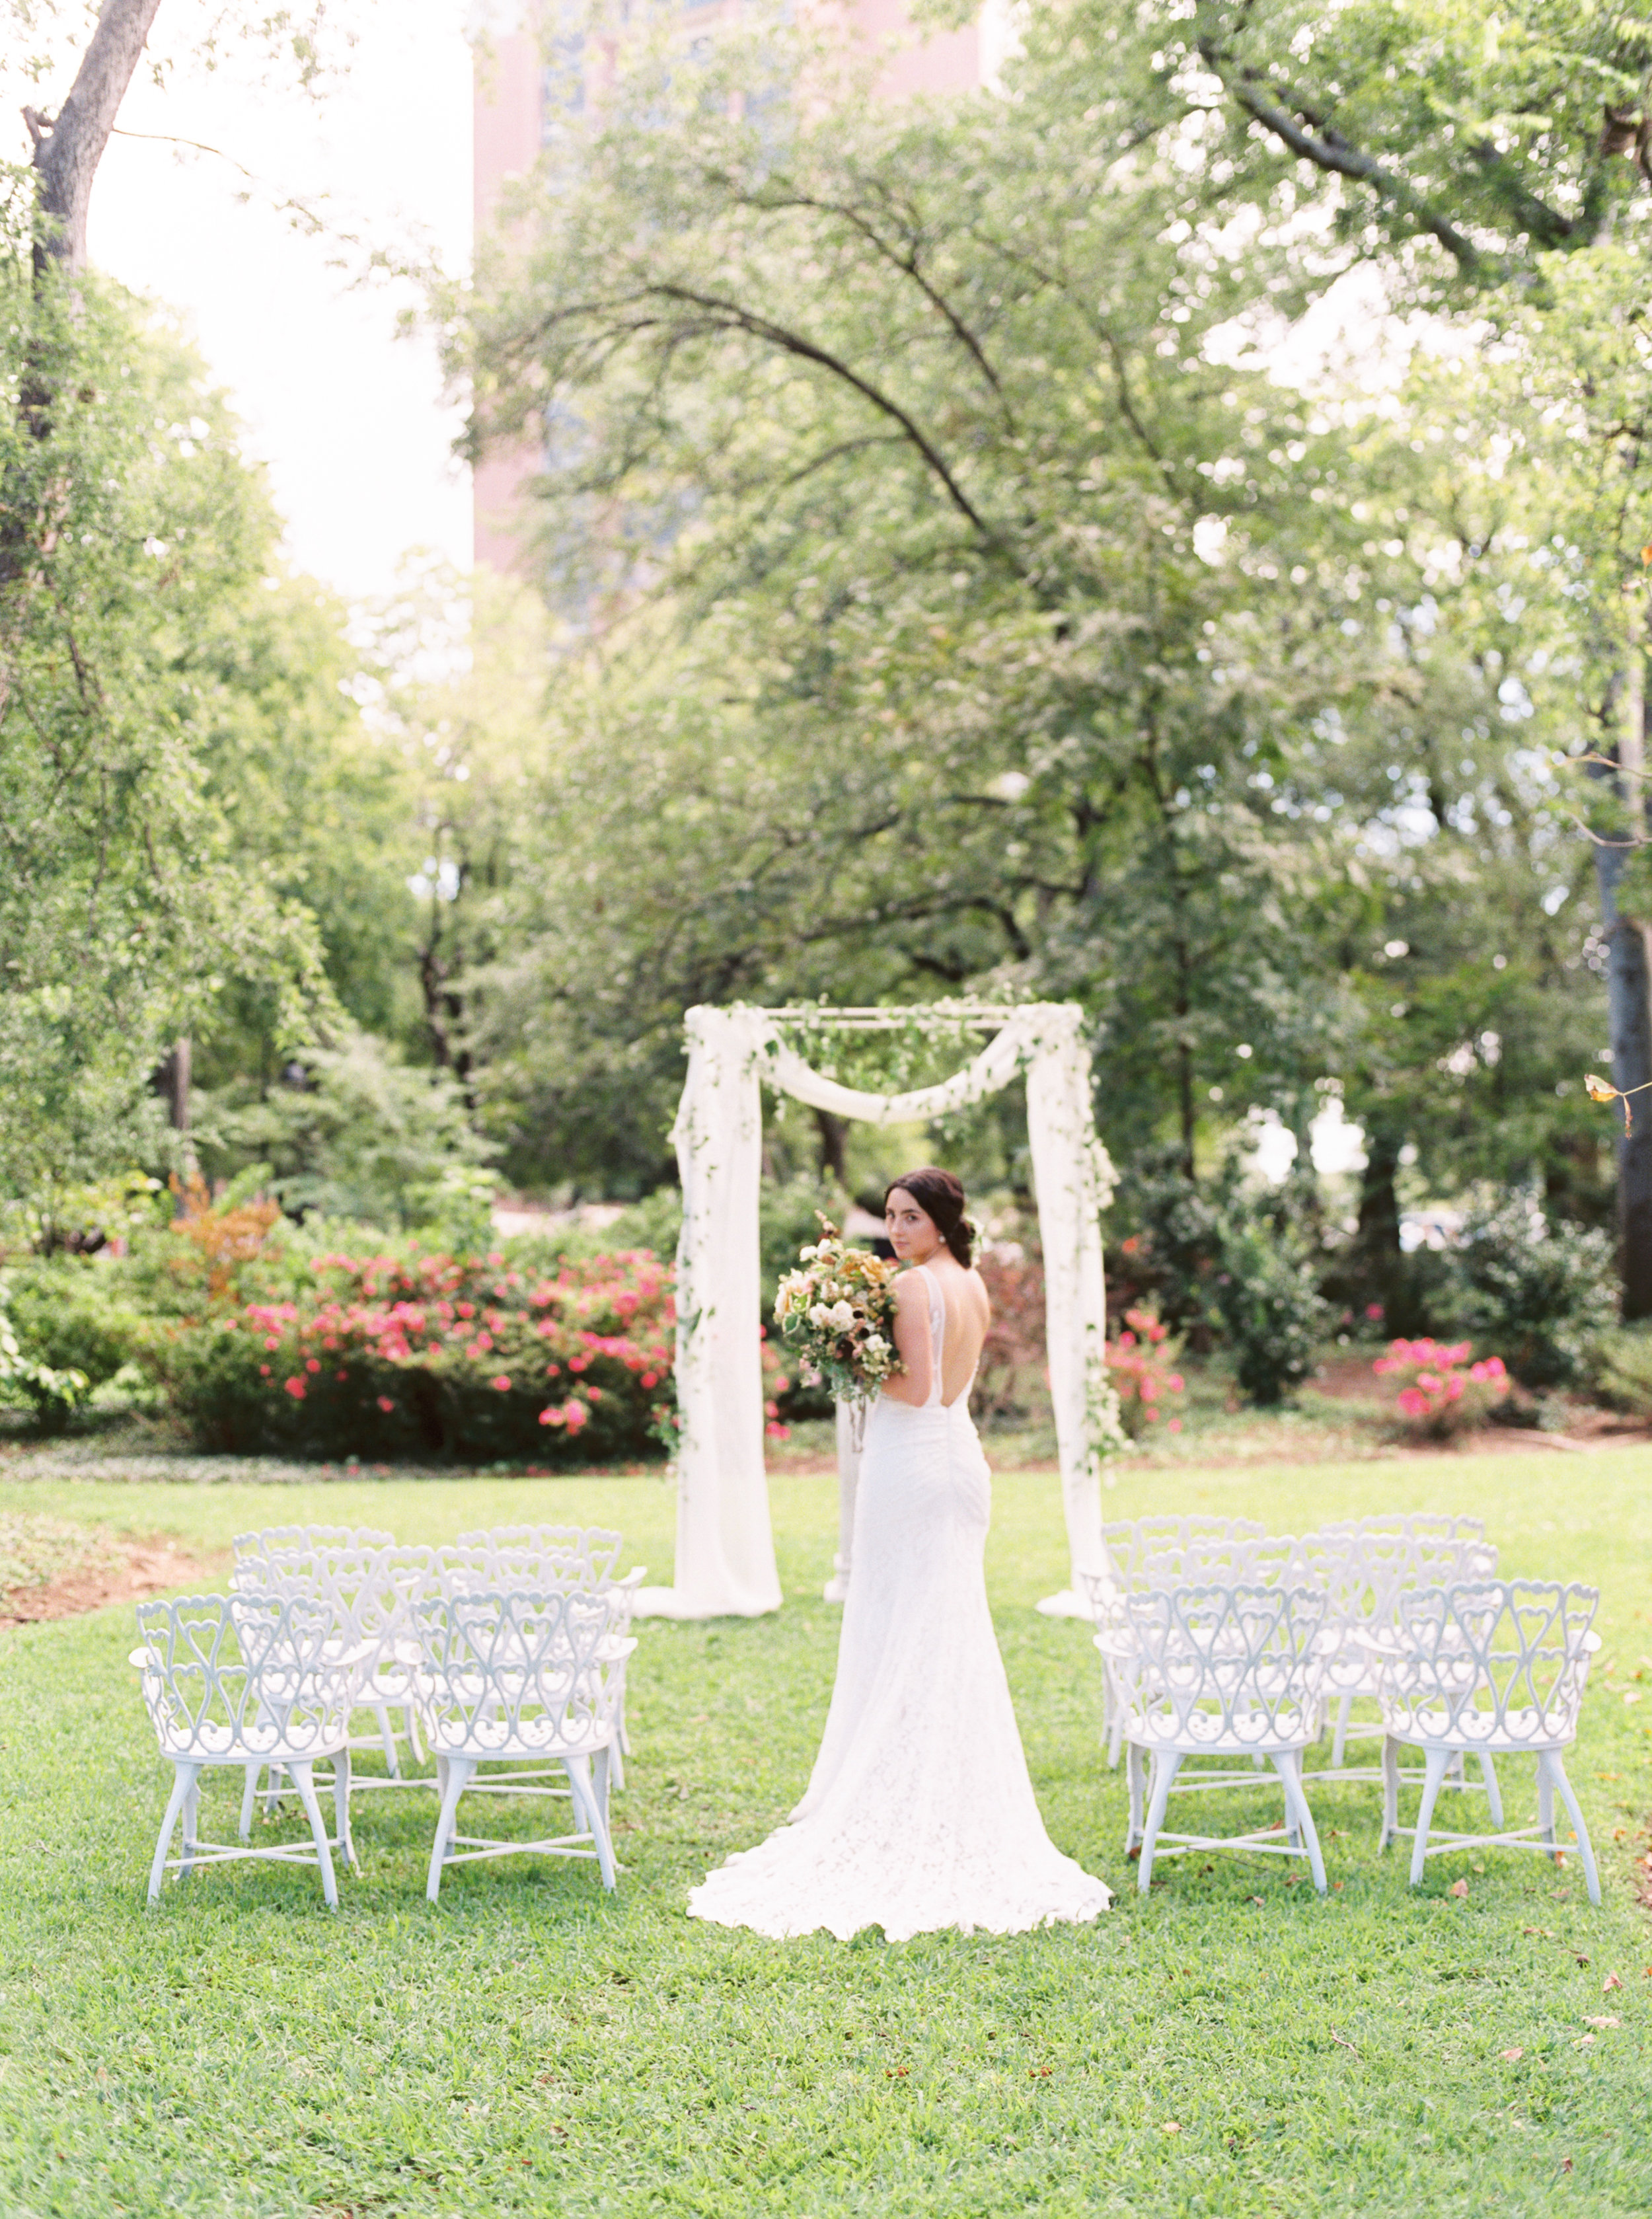 Callie Manion Photography_Garden Wedding Inspiration_141.jpg